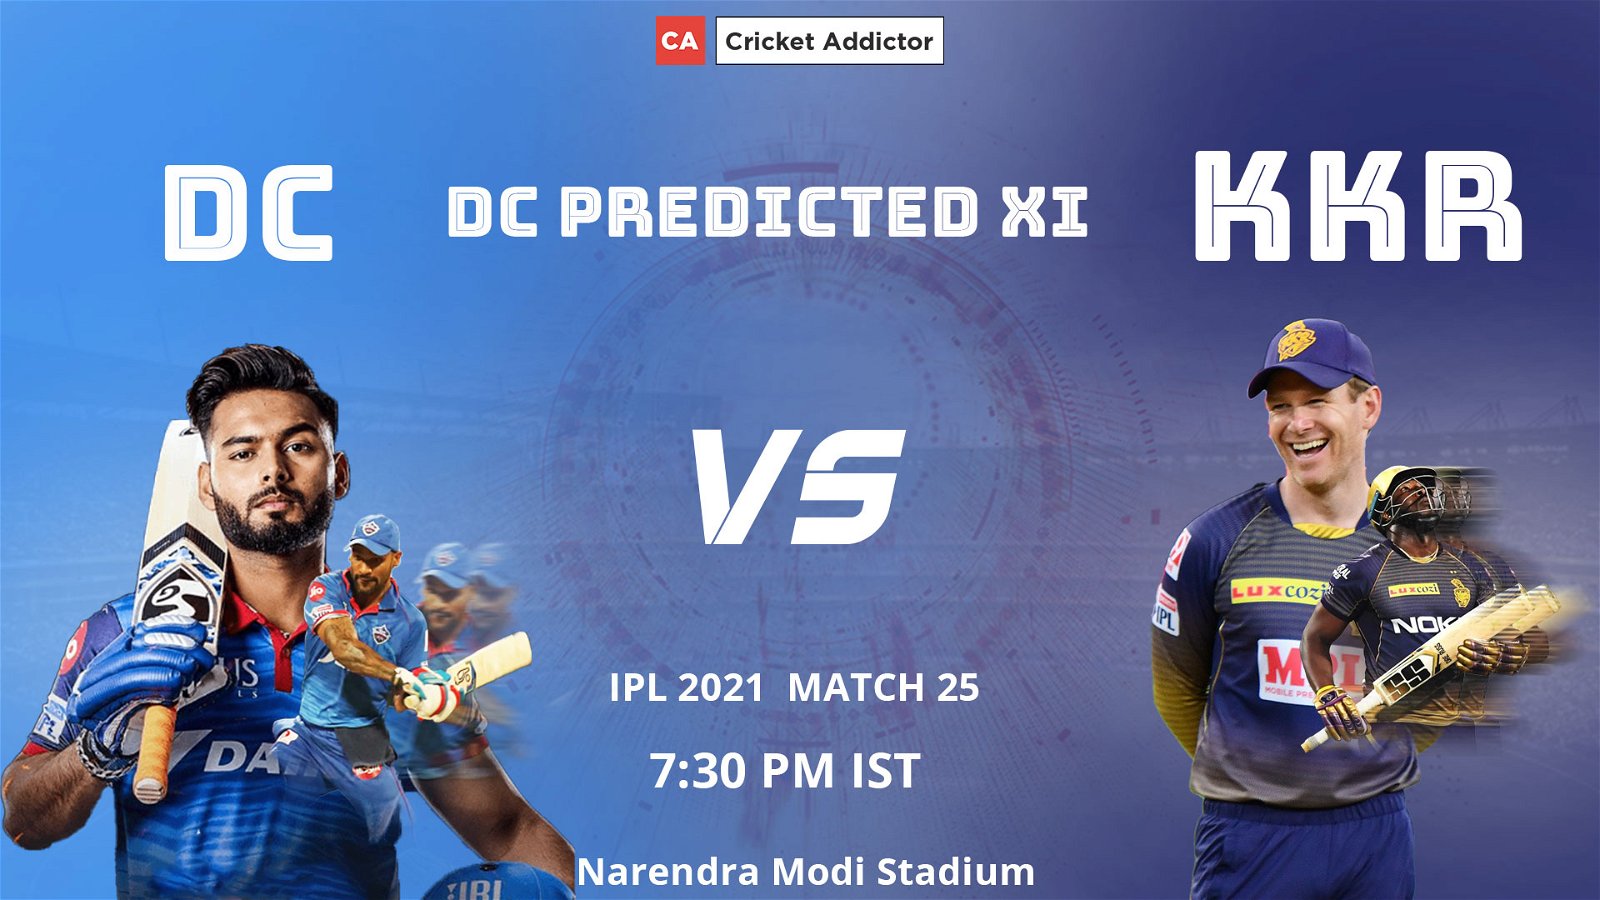 IPL 2021, Delhi Capitals, DC, predicted playing XI, playing XI, DC vs KKR